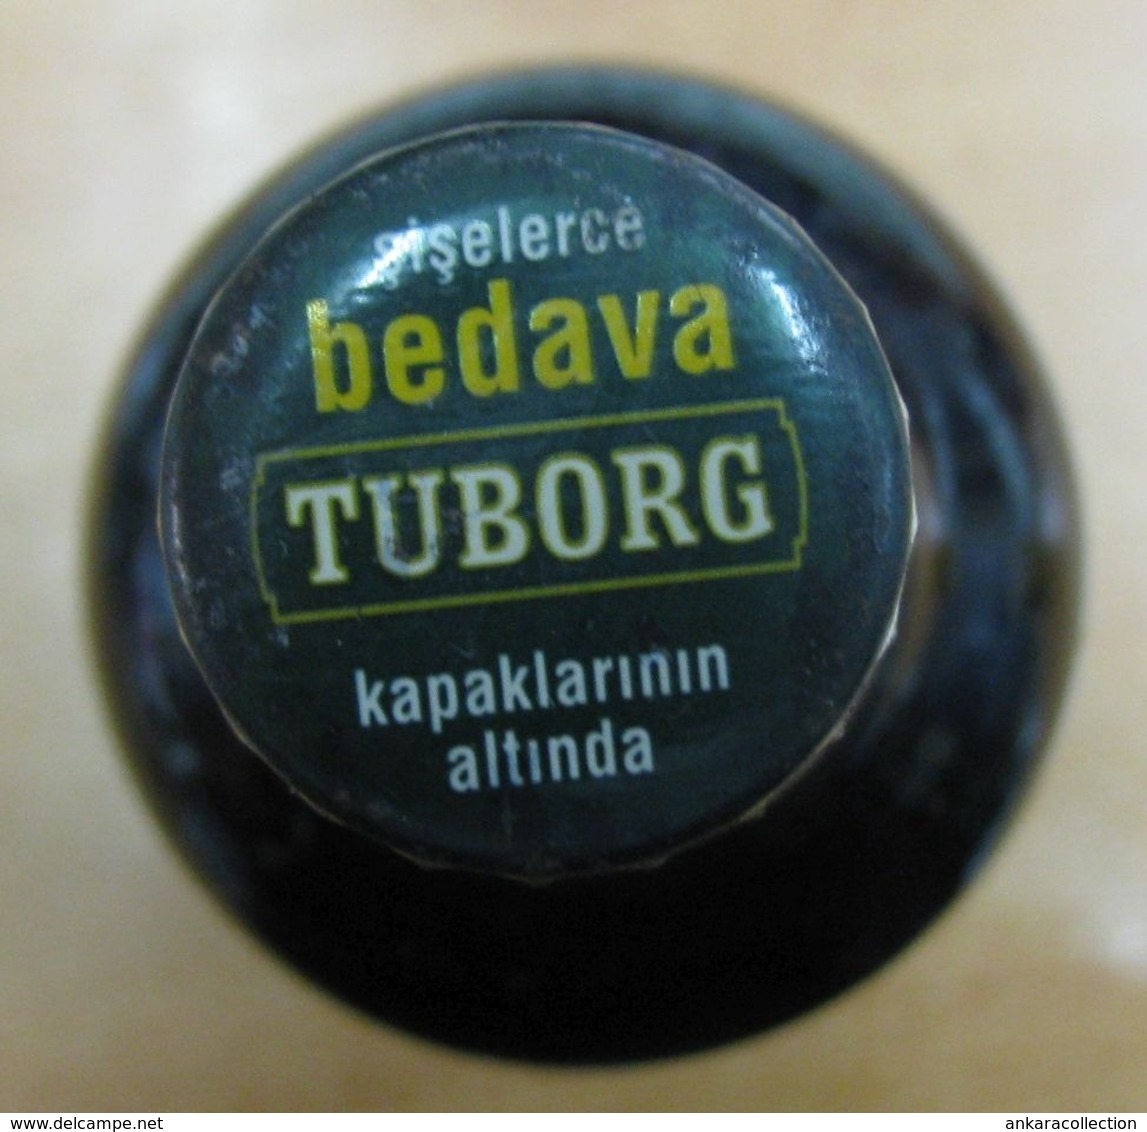 AC - TUBORG BEER VINTAGE BOTTLE Production Date : September 2001 Expiry Date : September 2002 FROM TURKEY FOR SECURITY - Bière